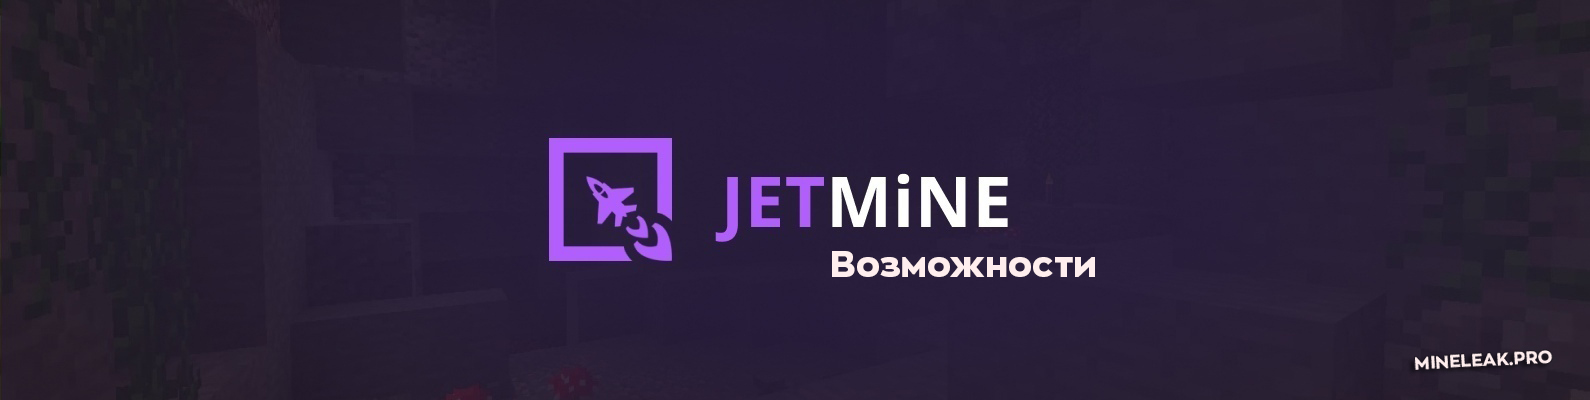 JetMine_logo_3.jpg